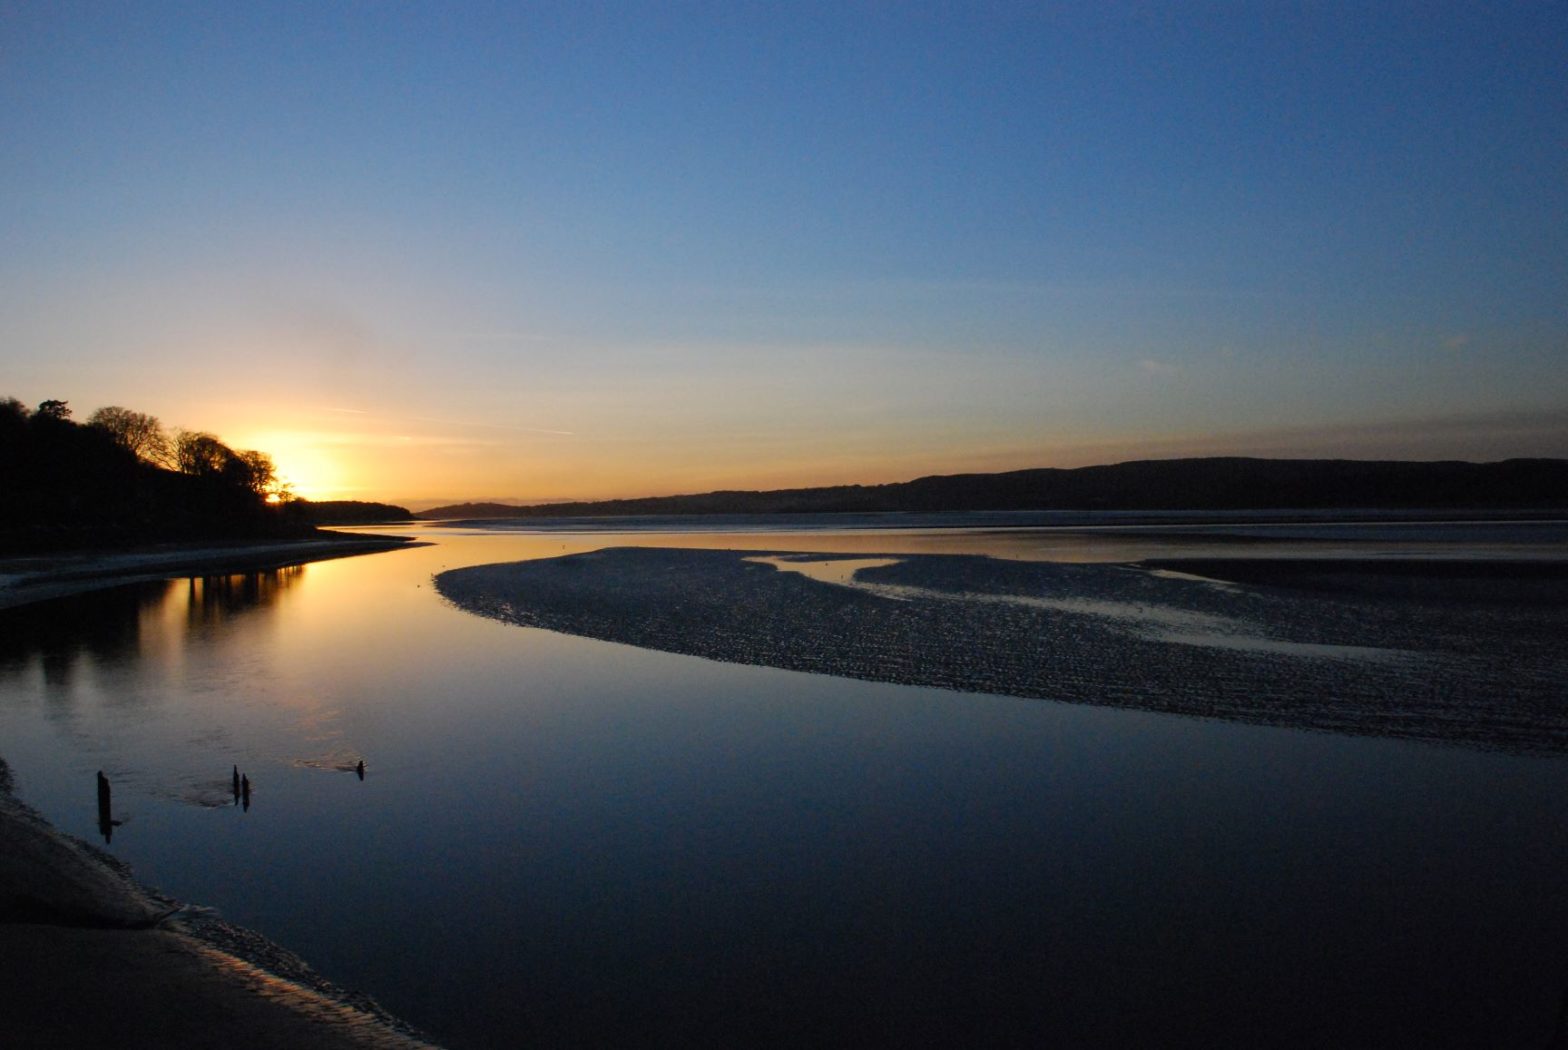 Sunset at Arnside on the Lake District coast